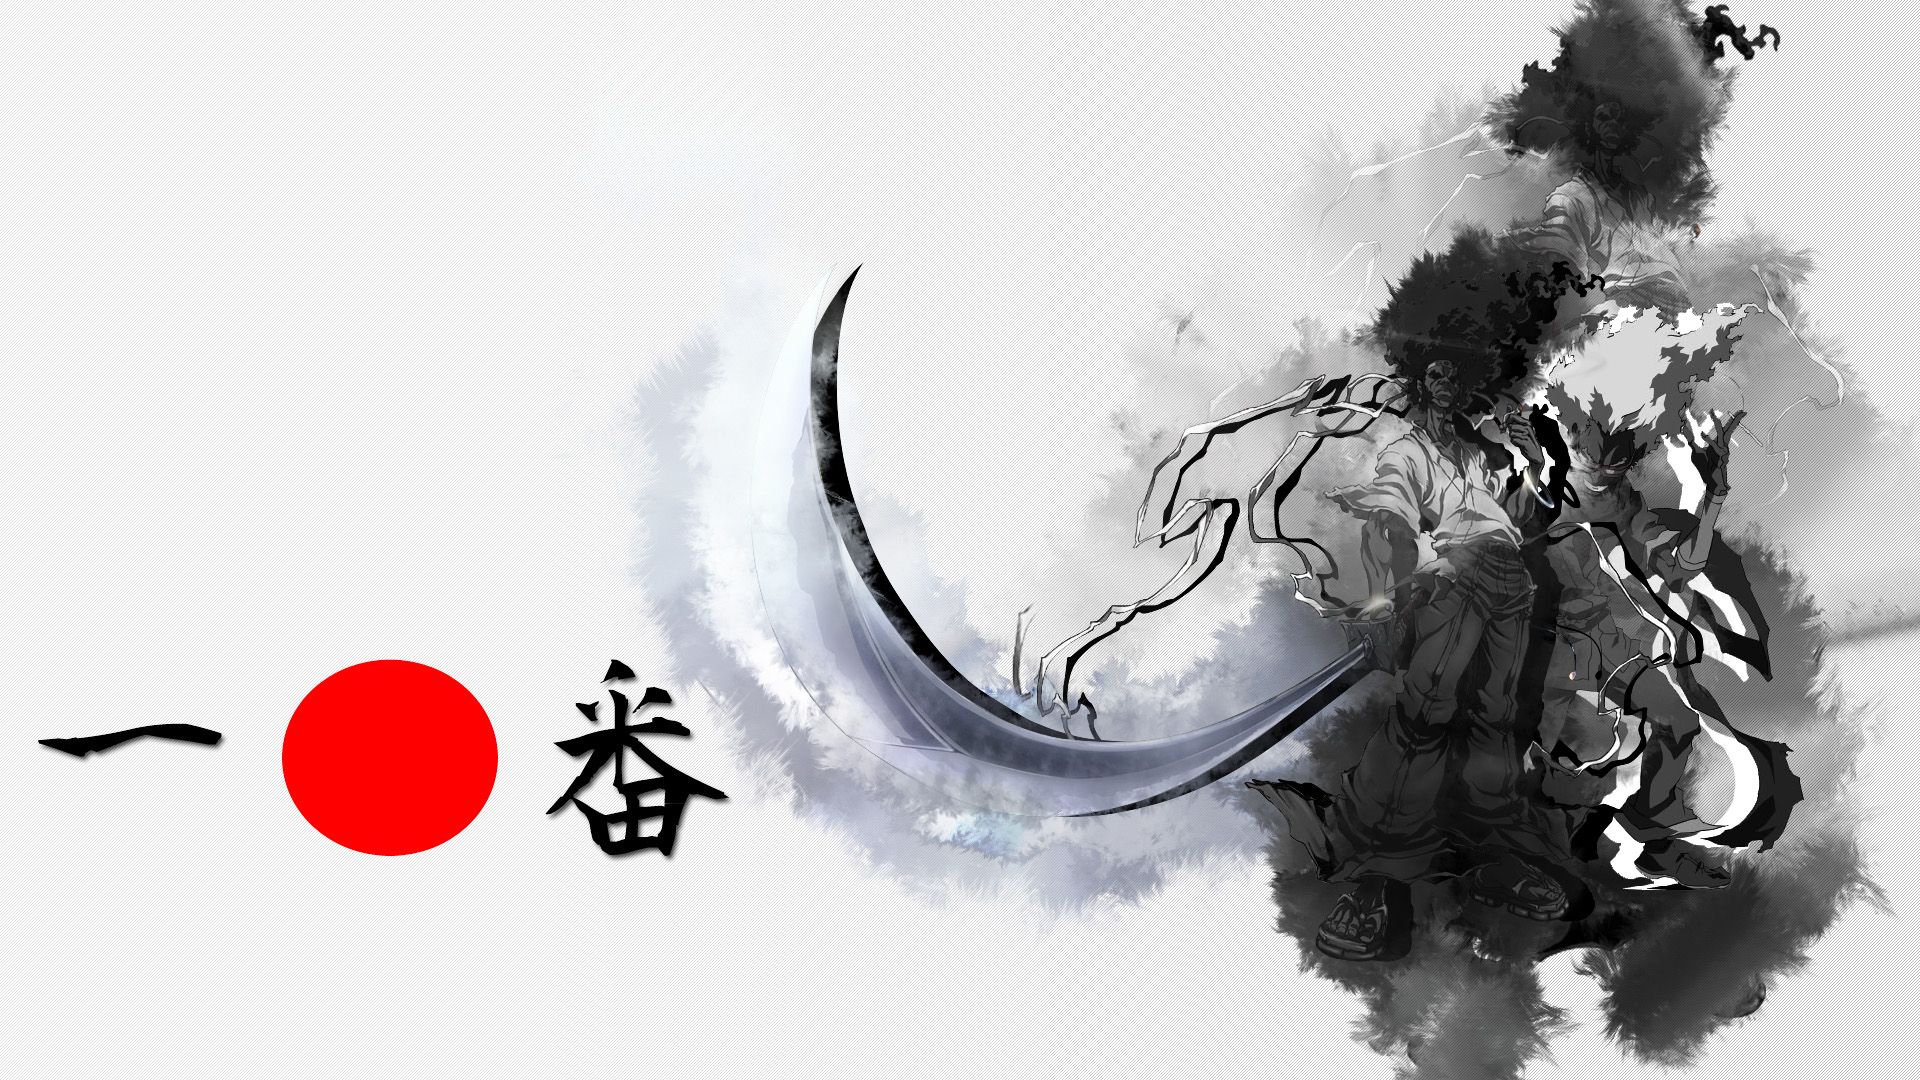 Free download Afro Samurai anime game f wallpaper 1920x1080 91855